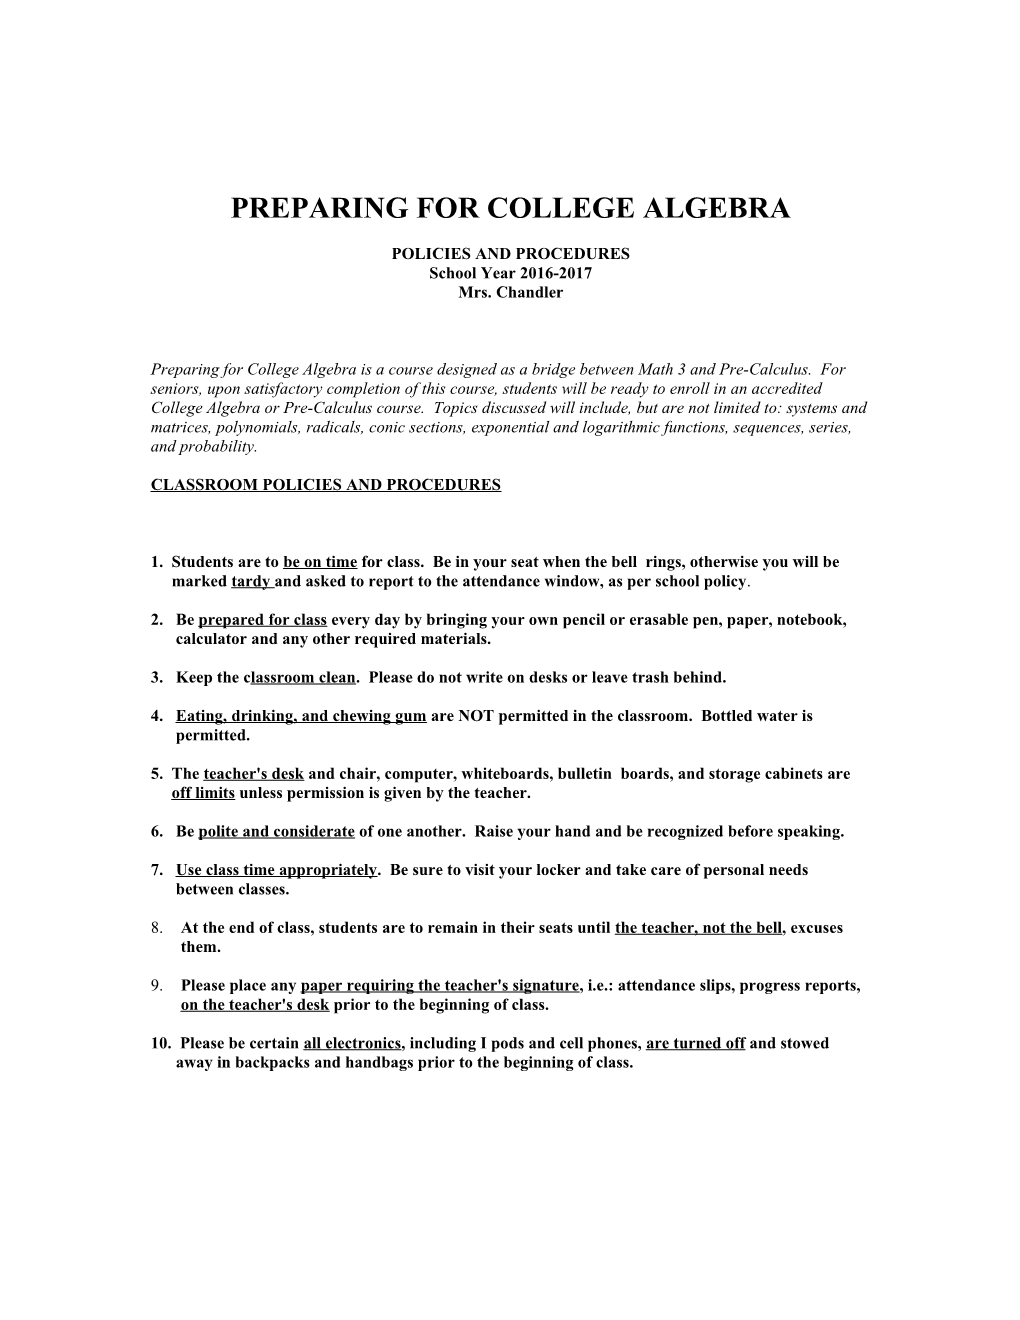 Preparing for College Algebra